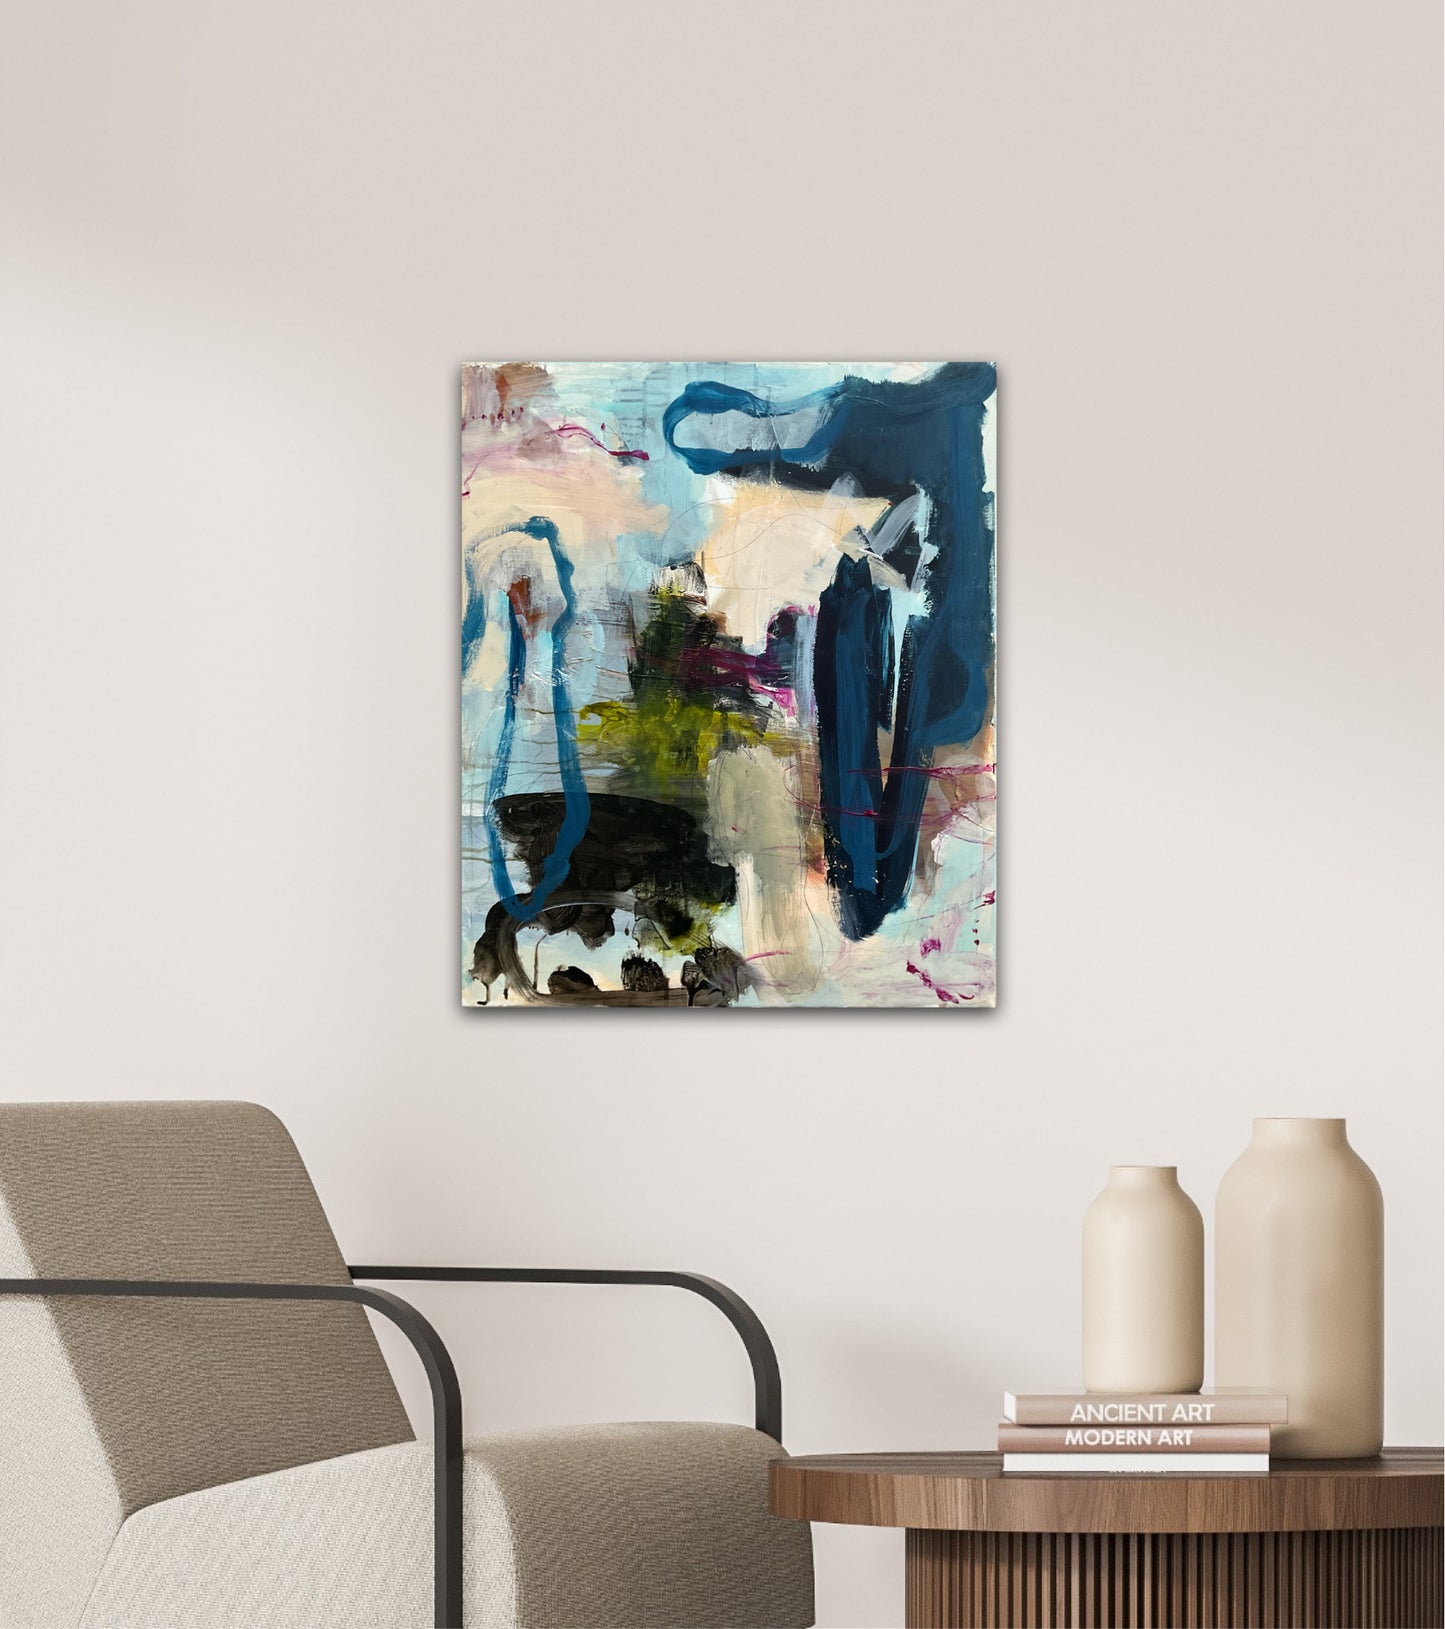 Abstrakt maleri, 50x60 cm, "Touch the sky" by Lone Reedtz , Abstrakt ekspressivt akrylmaleri på lærred